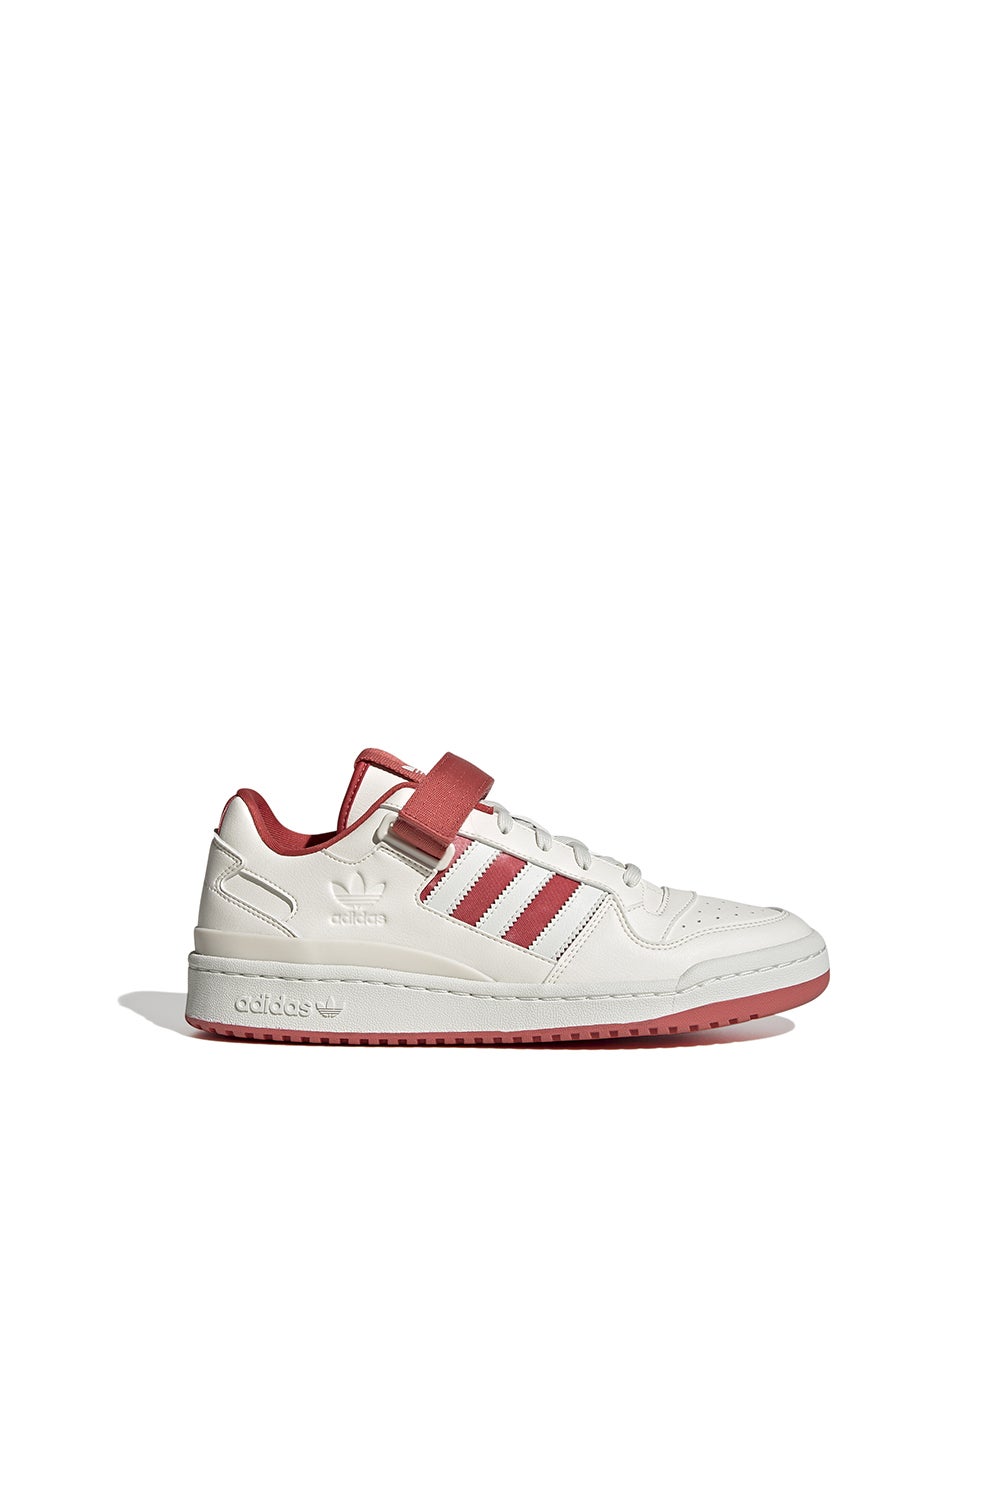 adidas Forum Low Shoes Chalk White/White Tint/Crew Red